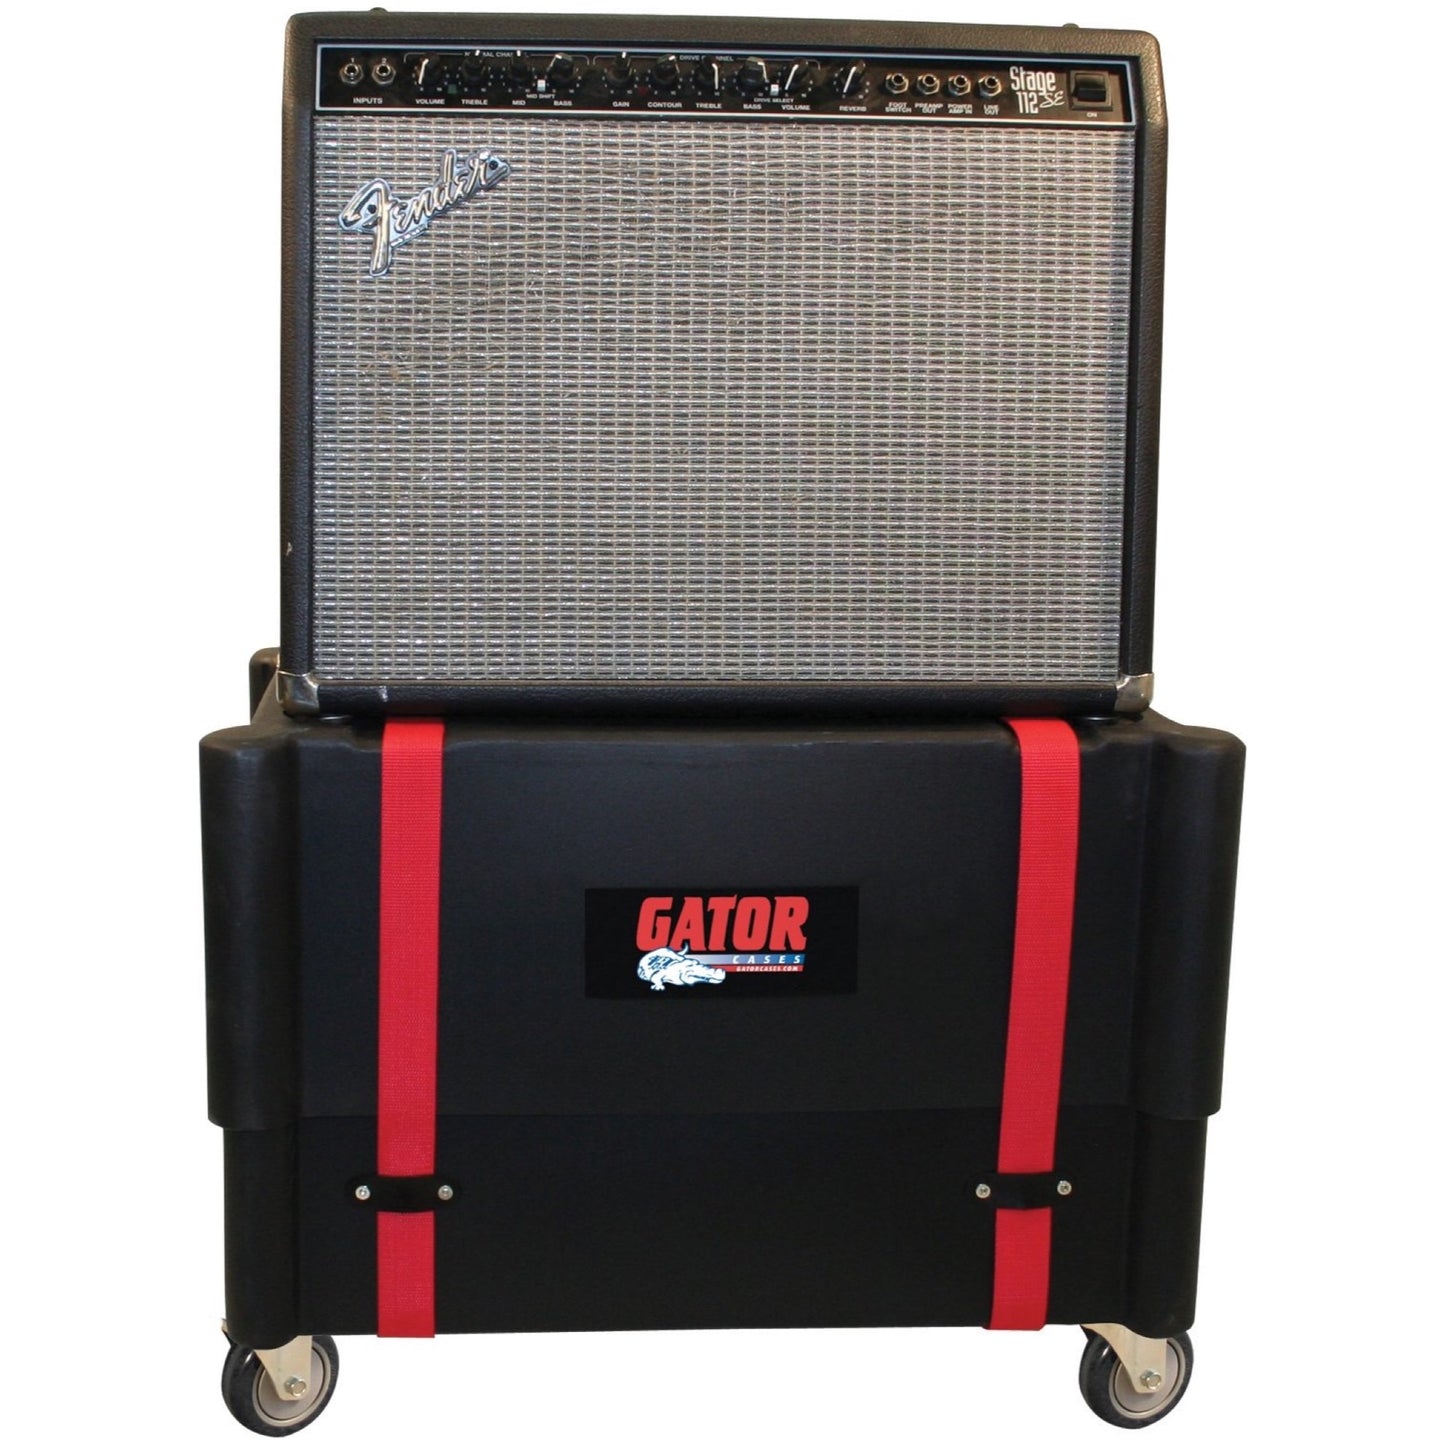 Gator G212ROTO Roto Molded 2x12 Amplifier Case